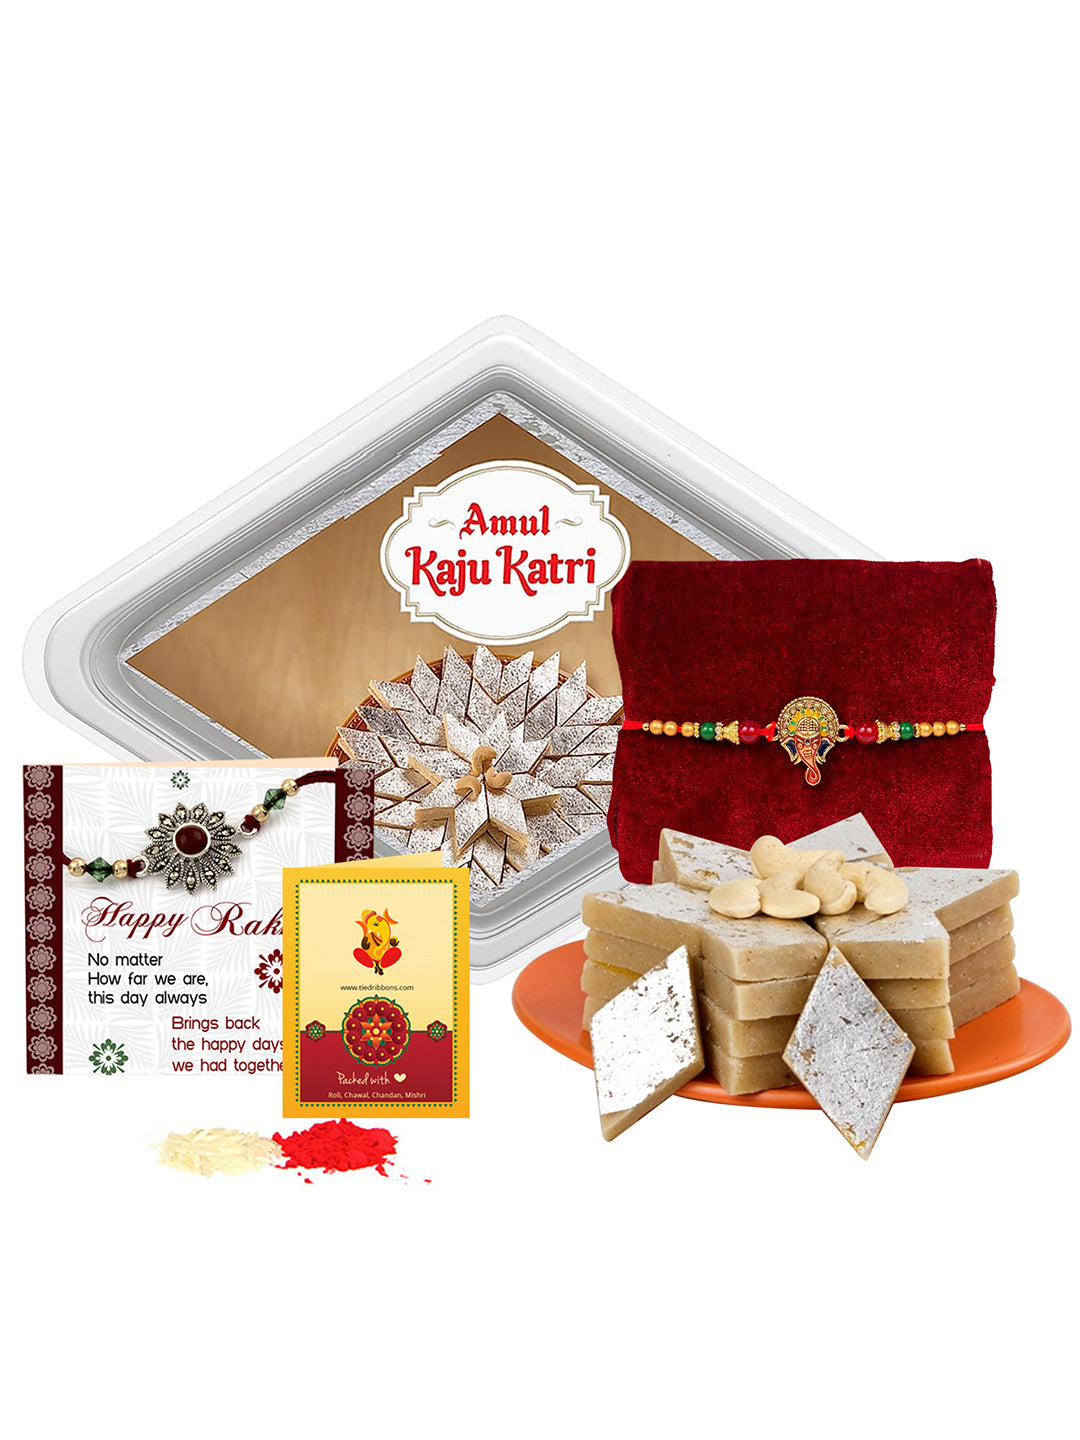 Buy CRAFTAM Rakhi Gifts for Brother - Budha Idol, Greeting, Roli Rice Pack  and 4 Rakhi Set Online at Best Prices in India - JioMart.